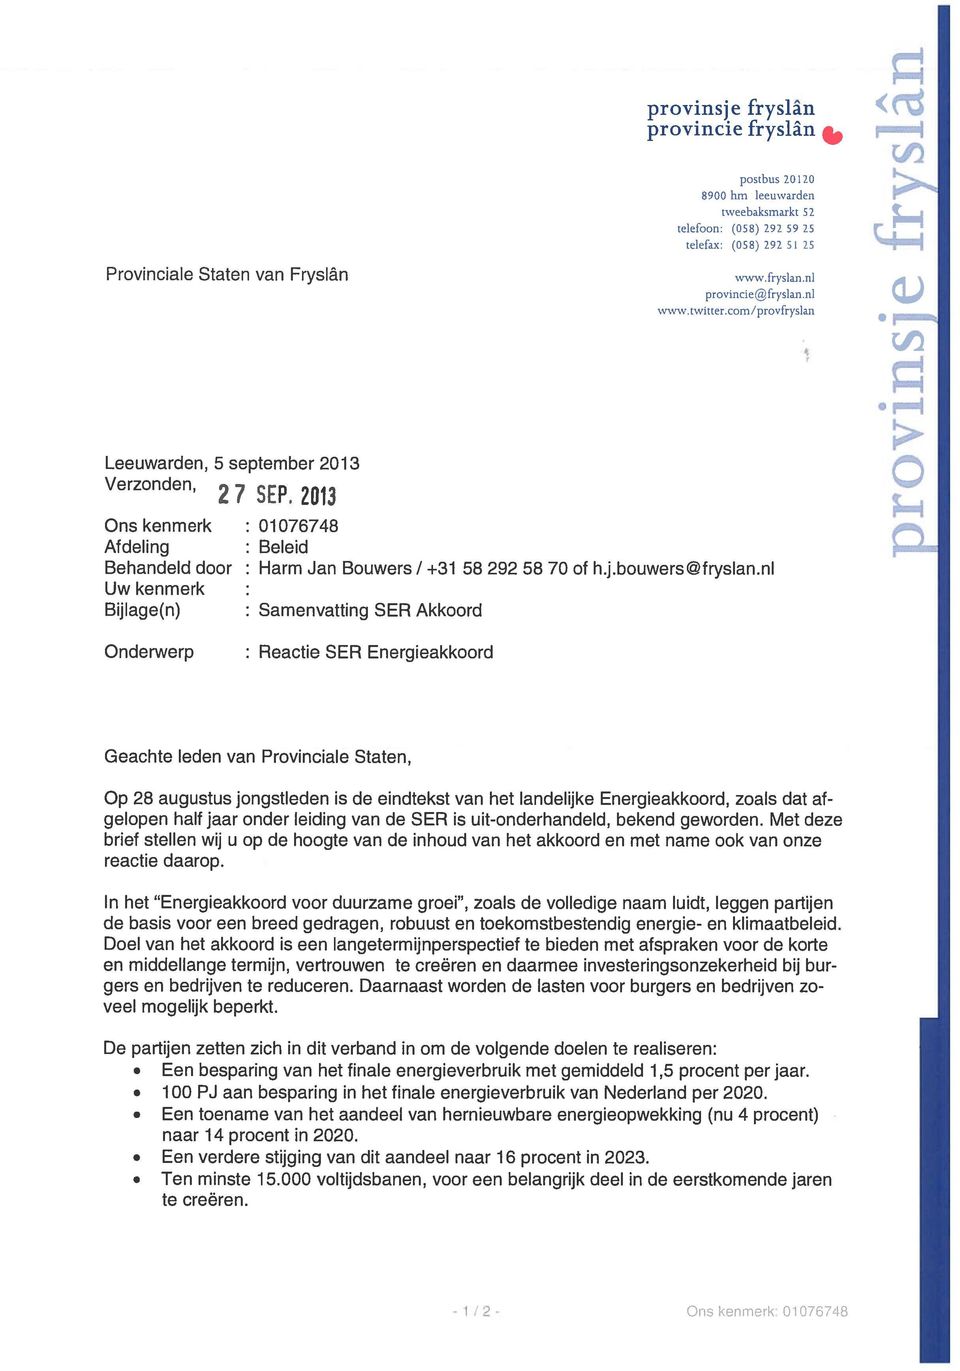 2013 Ons kenmerk : 01076748 Afdeling : Beleid Behandeld door : Harm Jan Bouwers / +31 58 292 58 70 of h.j.bouwers@fryslan.